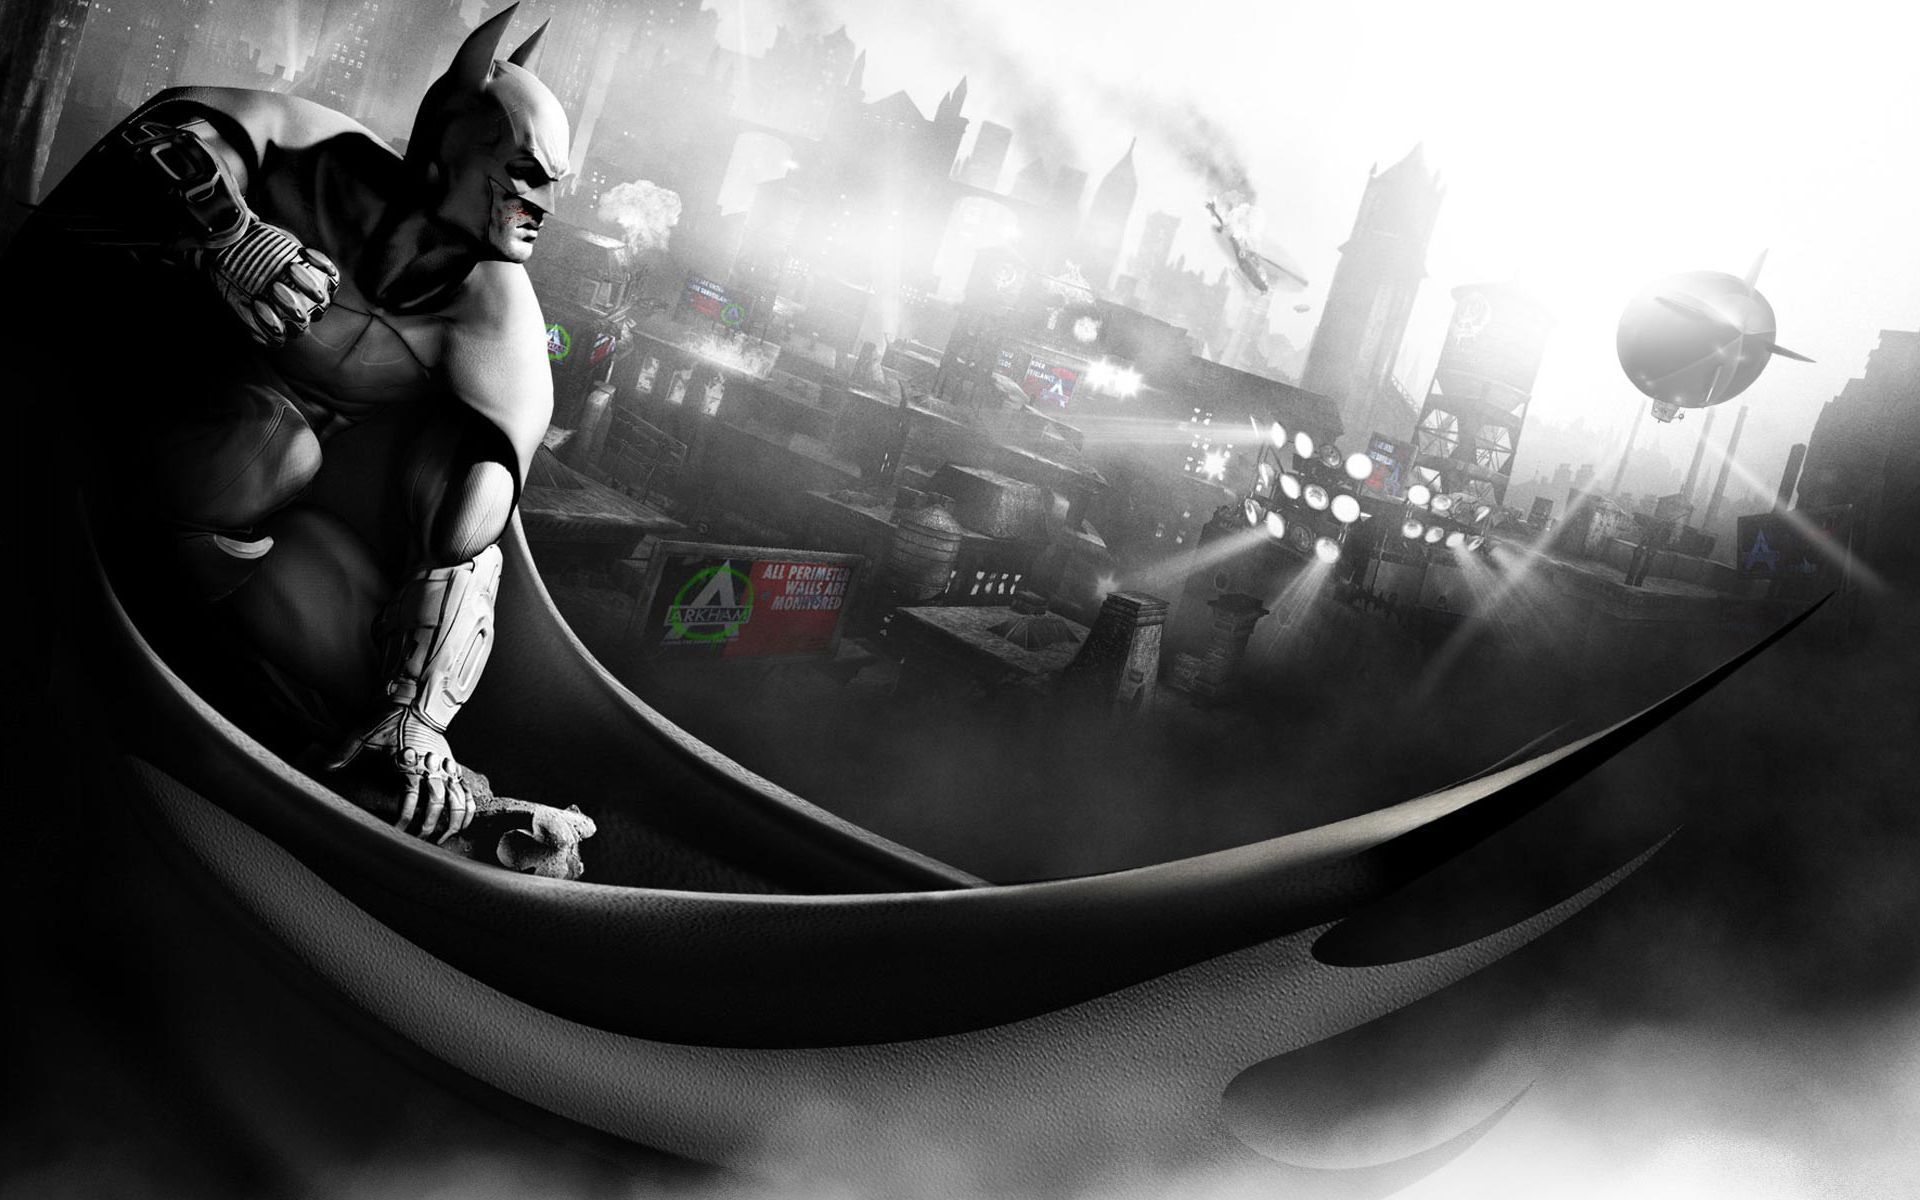 192 Batman: Arkham City HD Wallpapers, Backgrounds - Wallpaper Abyss